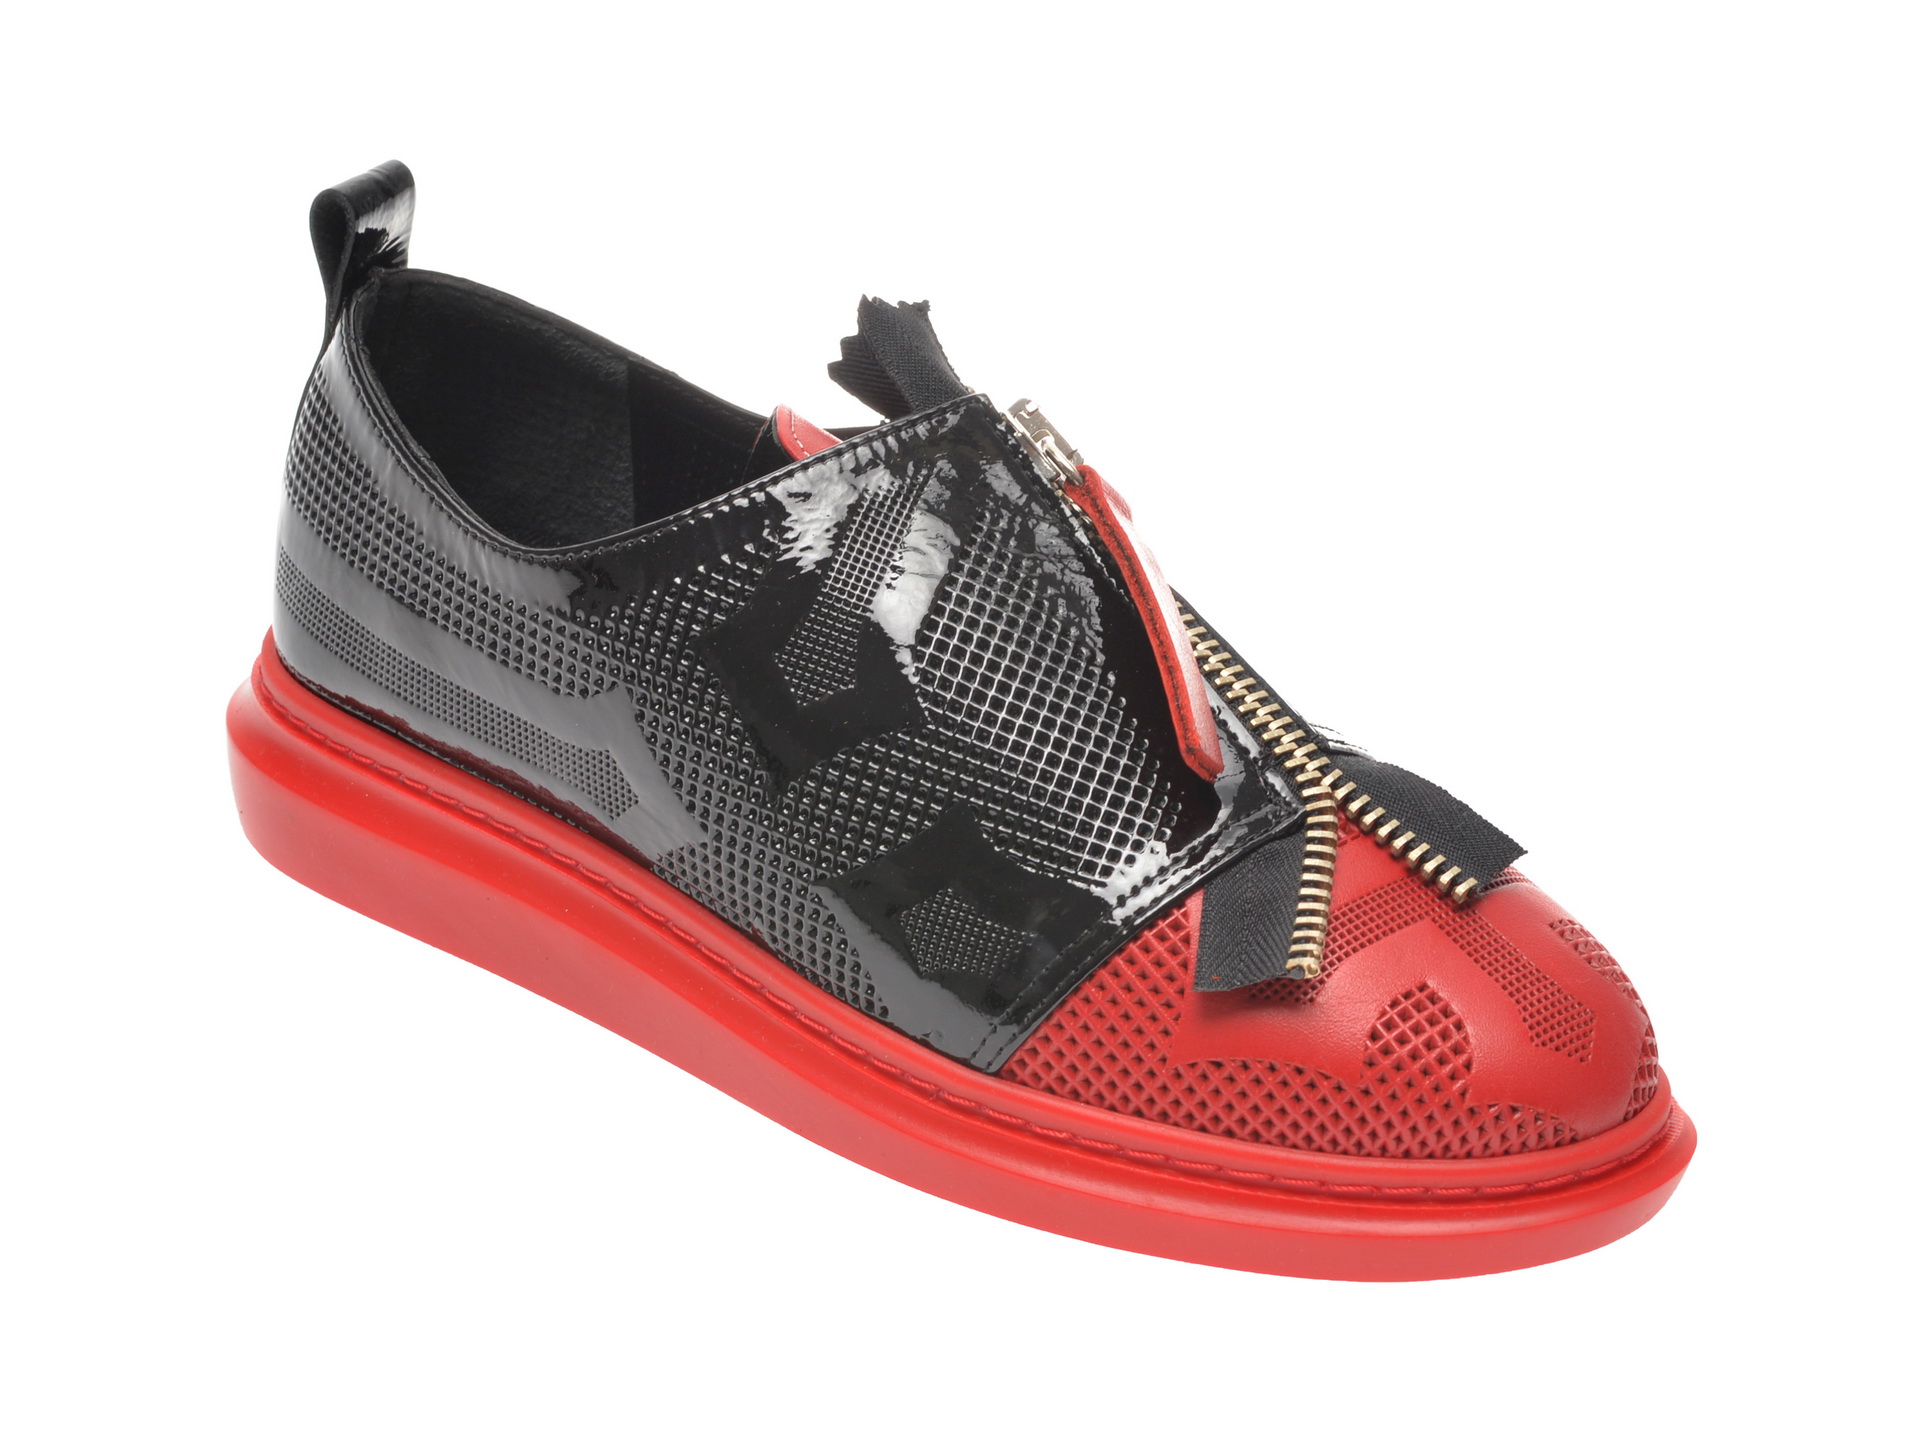 Pantofi FLAVIA PASSINI negri, 0612150, din piele naturala